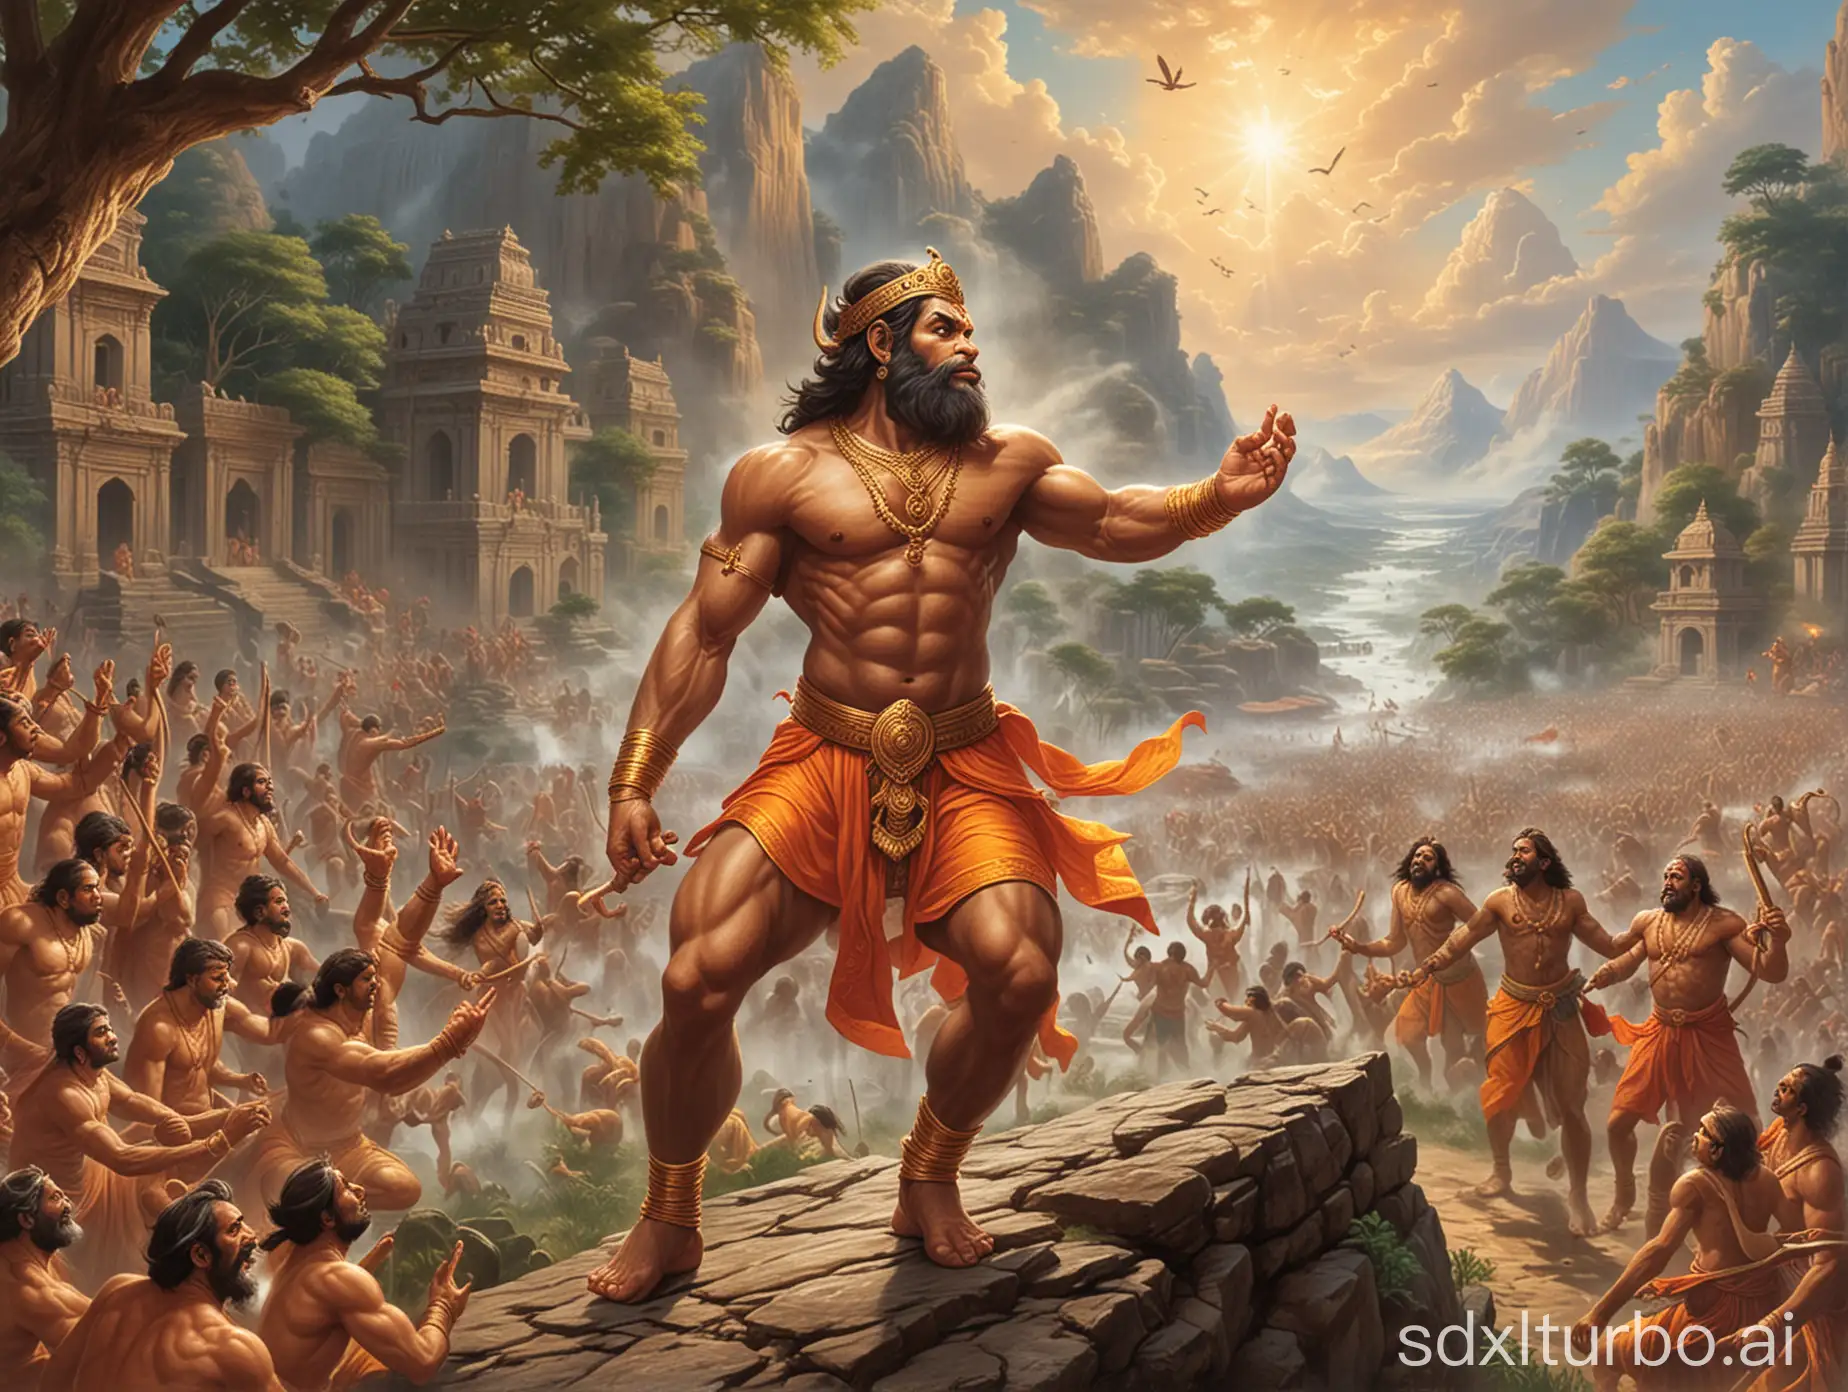 Divine-Encounter-Hanuman-and-Sri-Ram-in-the-Ancient-Kingdom